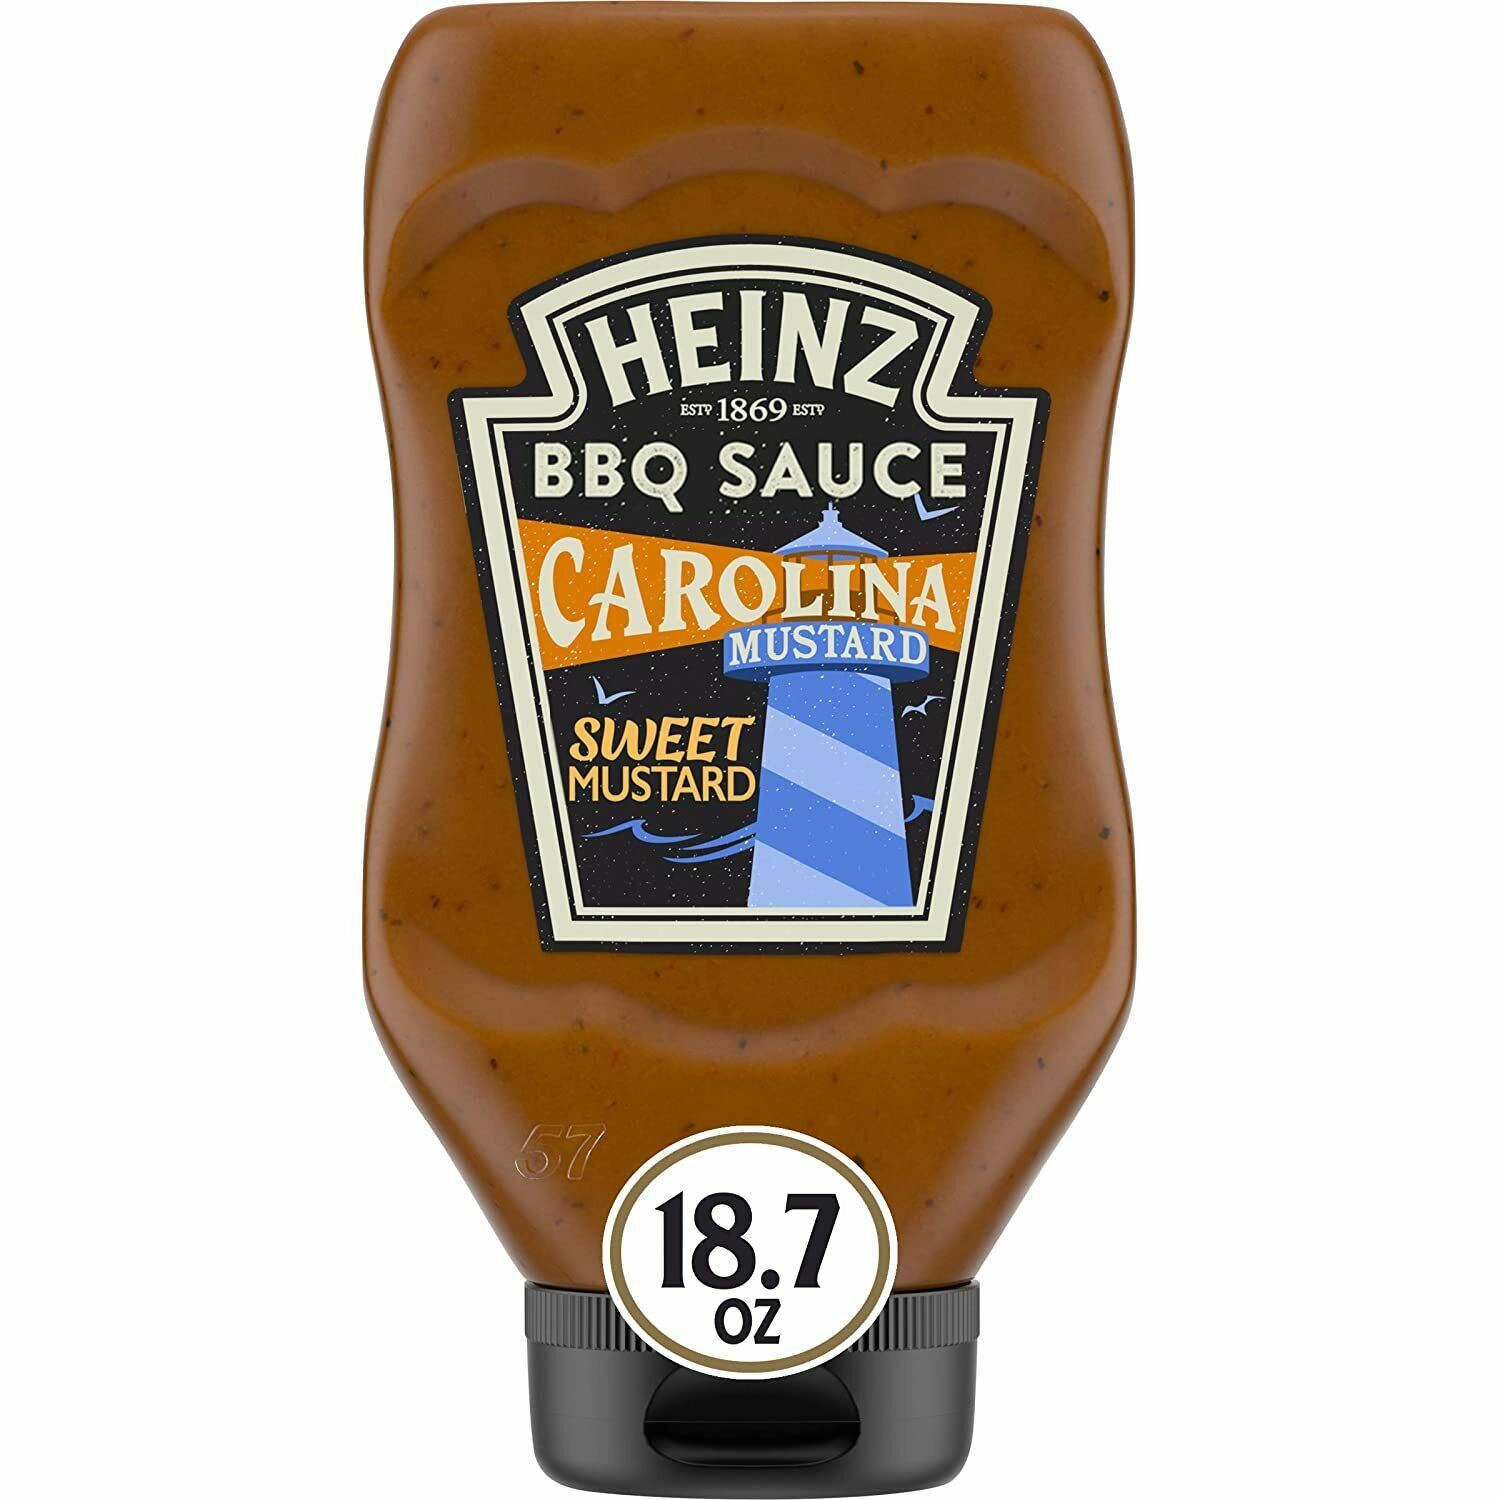 Heinz Carolina Mustard Style BBQ Sauce - Sweet Mustard - 18.7 oz (531g) - 2-Pack